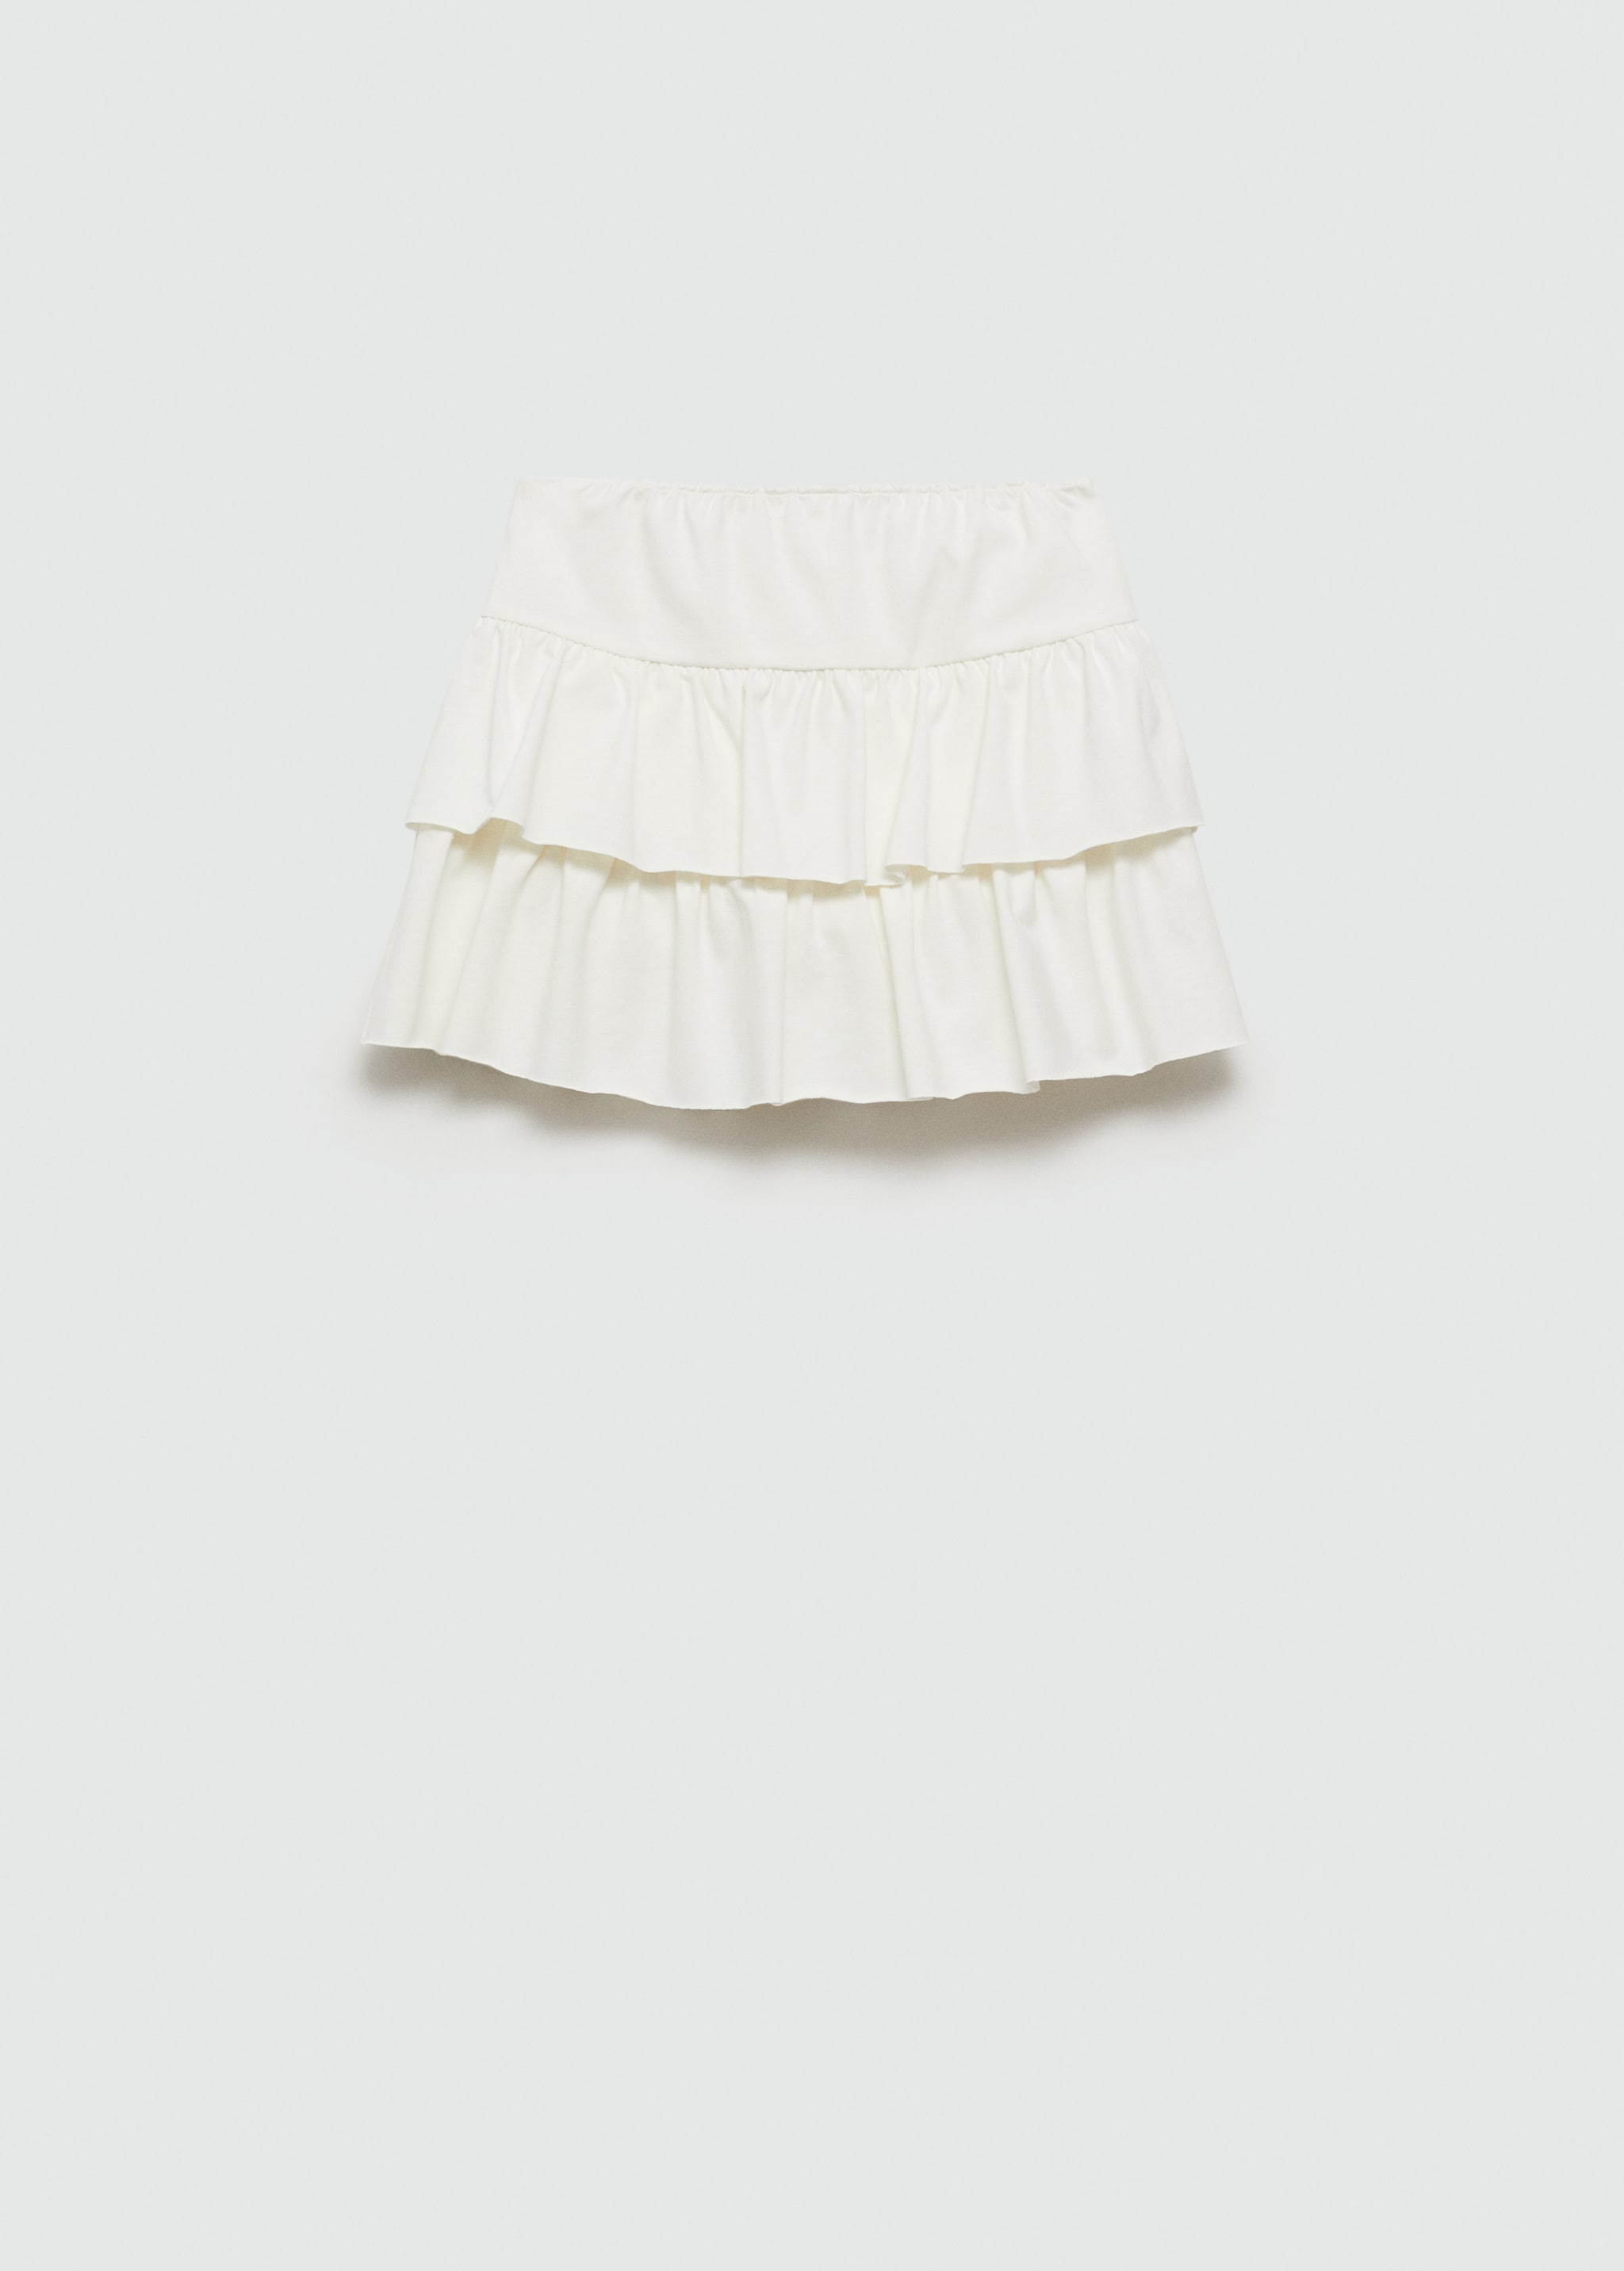 Ruffled trouser skirt - Изделие без модели